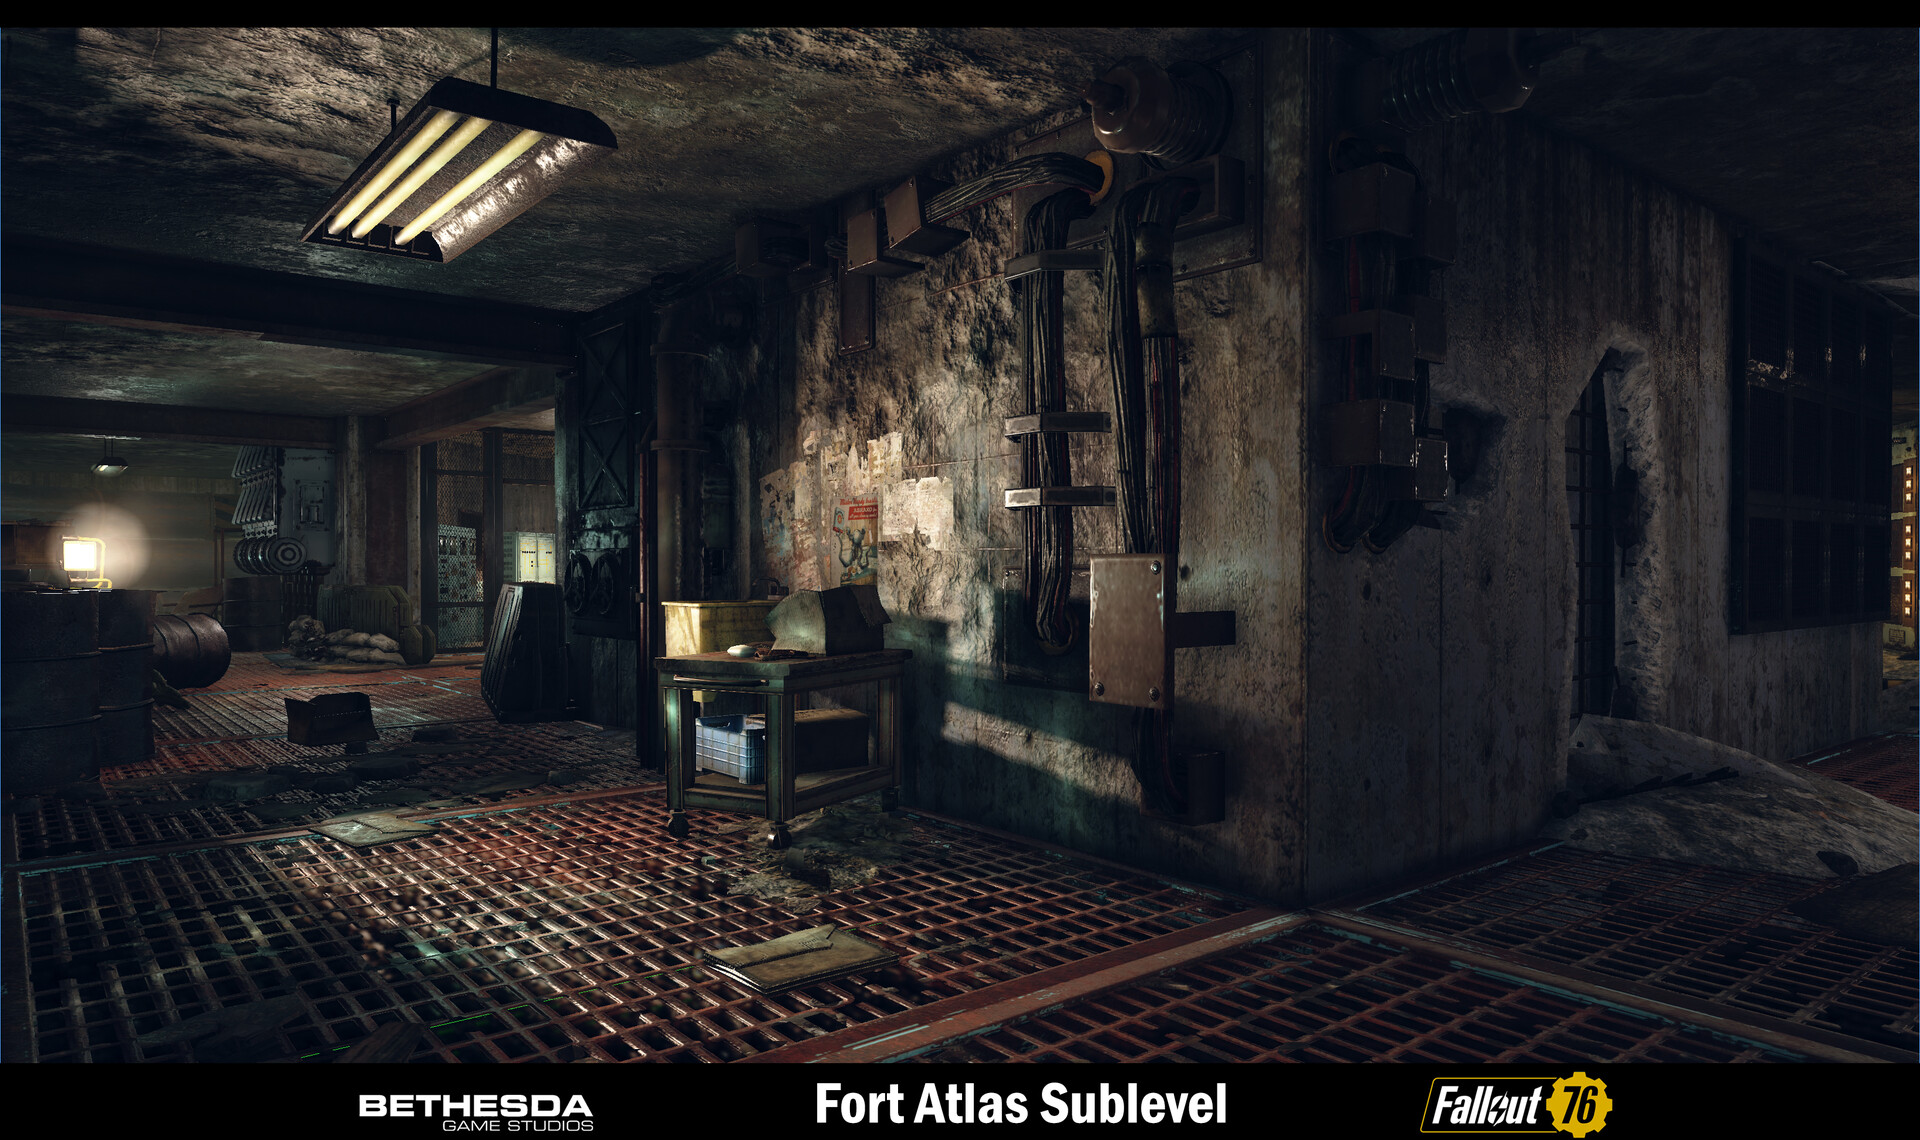 ArtStation - Fallout 76, Fort Atlas Sublevels